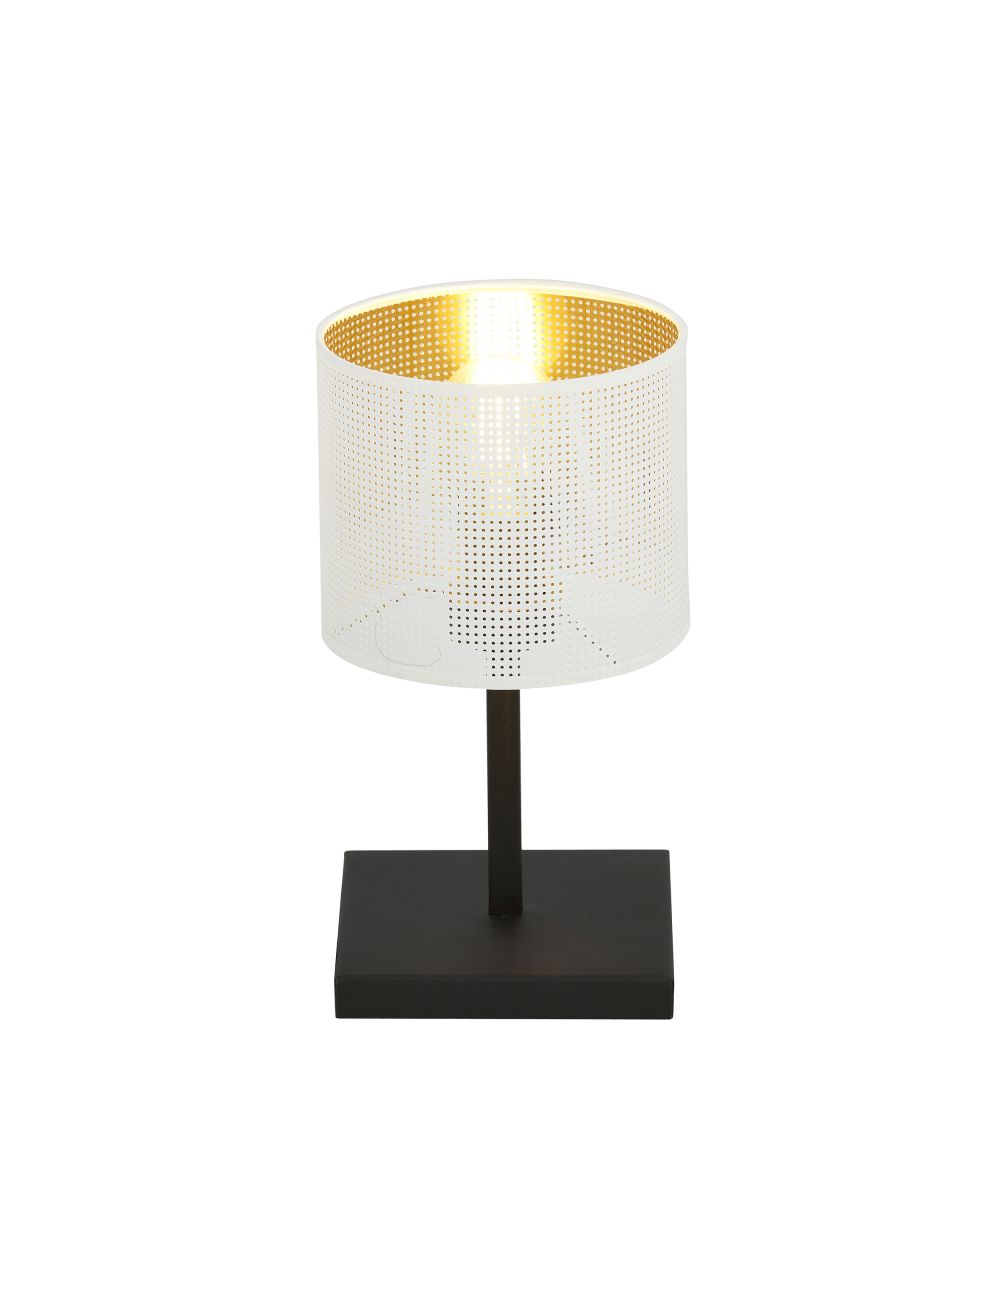 JORDAN LN1 WHITE/GOLD 1145/LN1 lampa sufitowa żyrandol oryginalny Design abażury EMIBIG